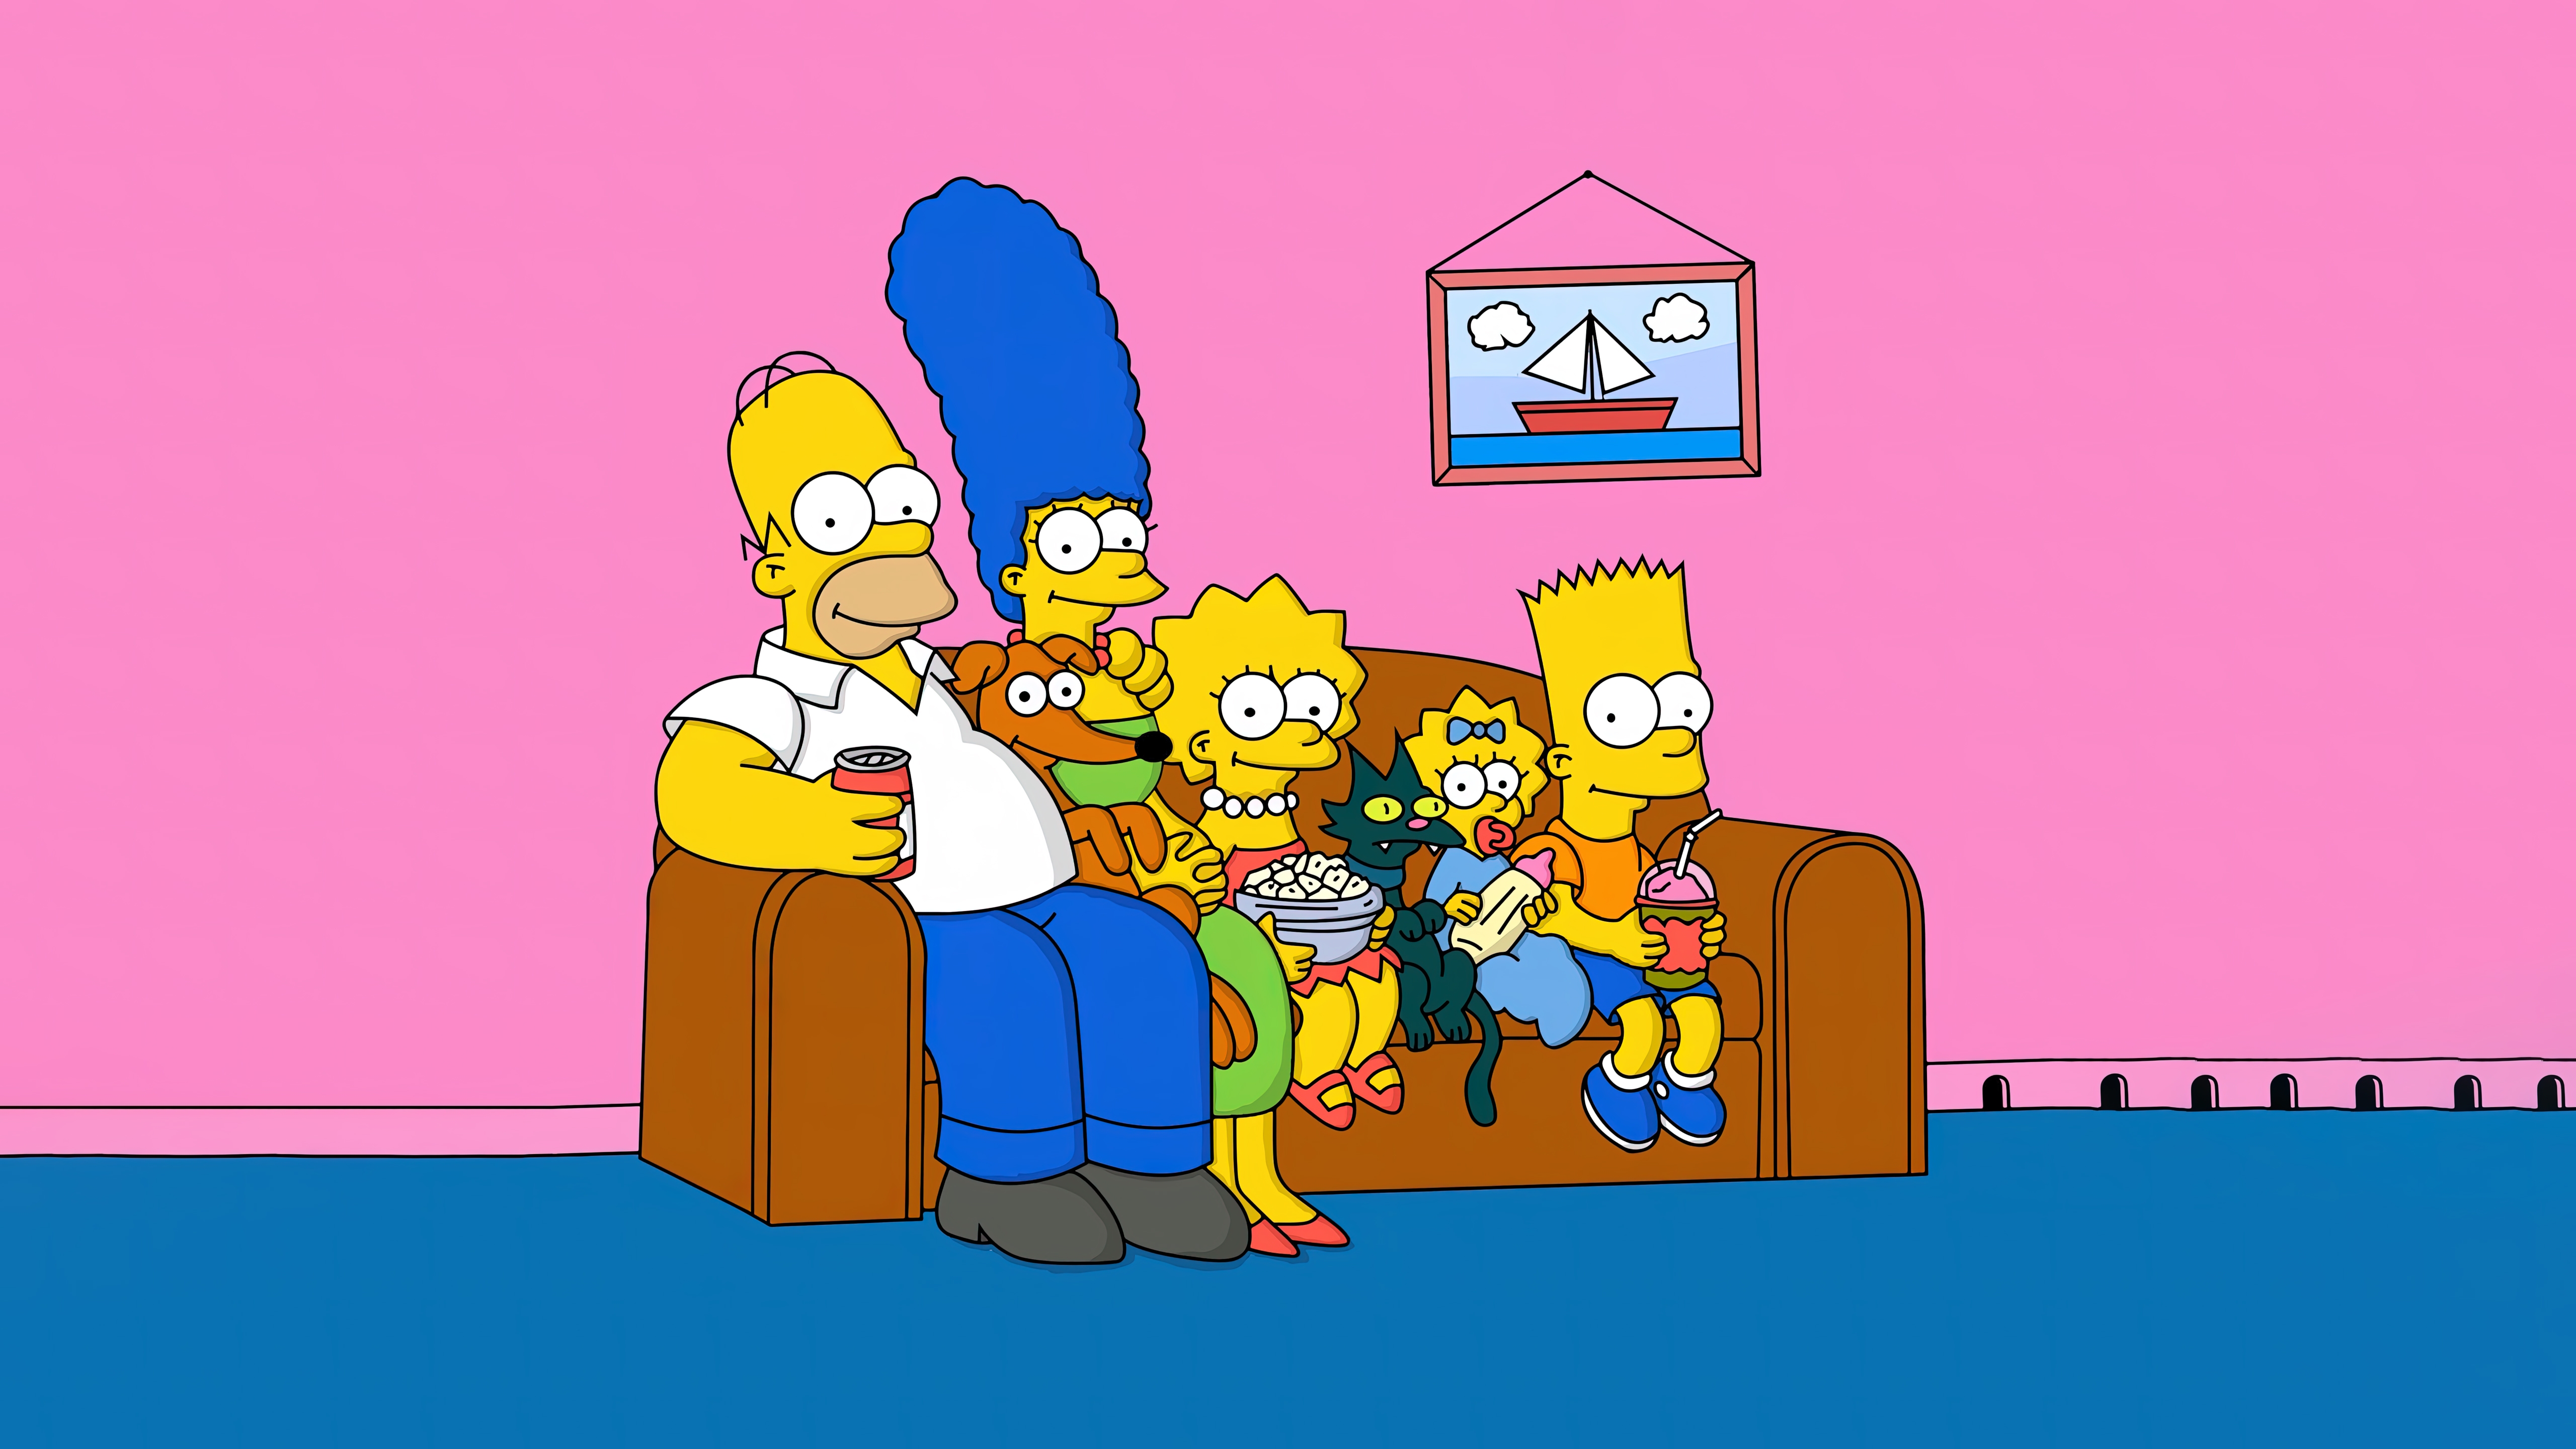 HD wallpaper, Snowball Cat, Bart Simpson, Lisa Simpson, Homer Simpson, Pink Background, Simpson Family, Marge Simpson, The Simpsons, Maggie Simpson, 5K